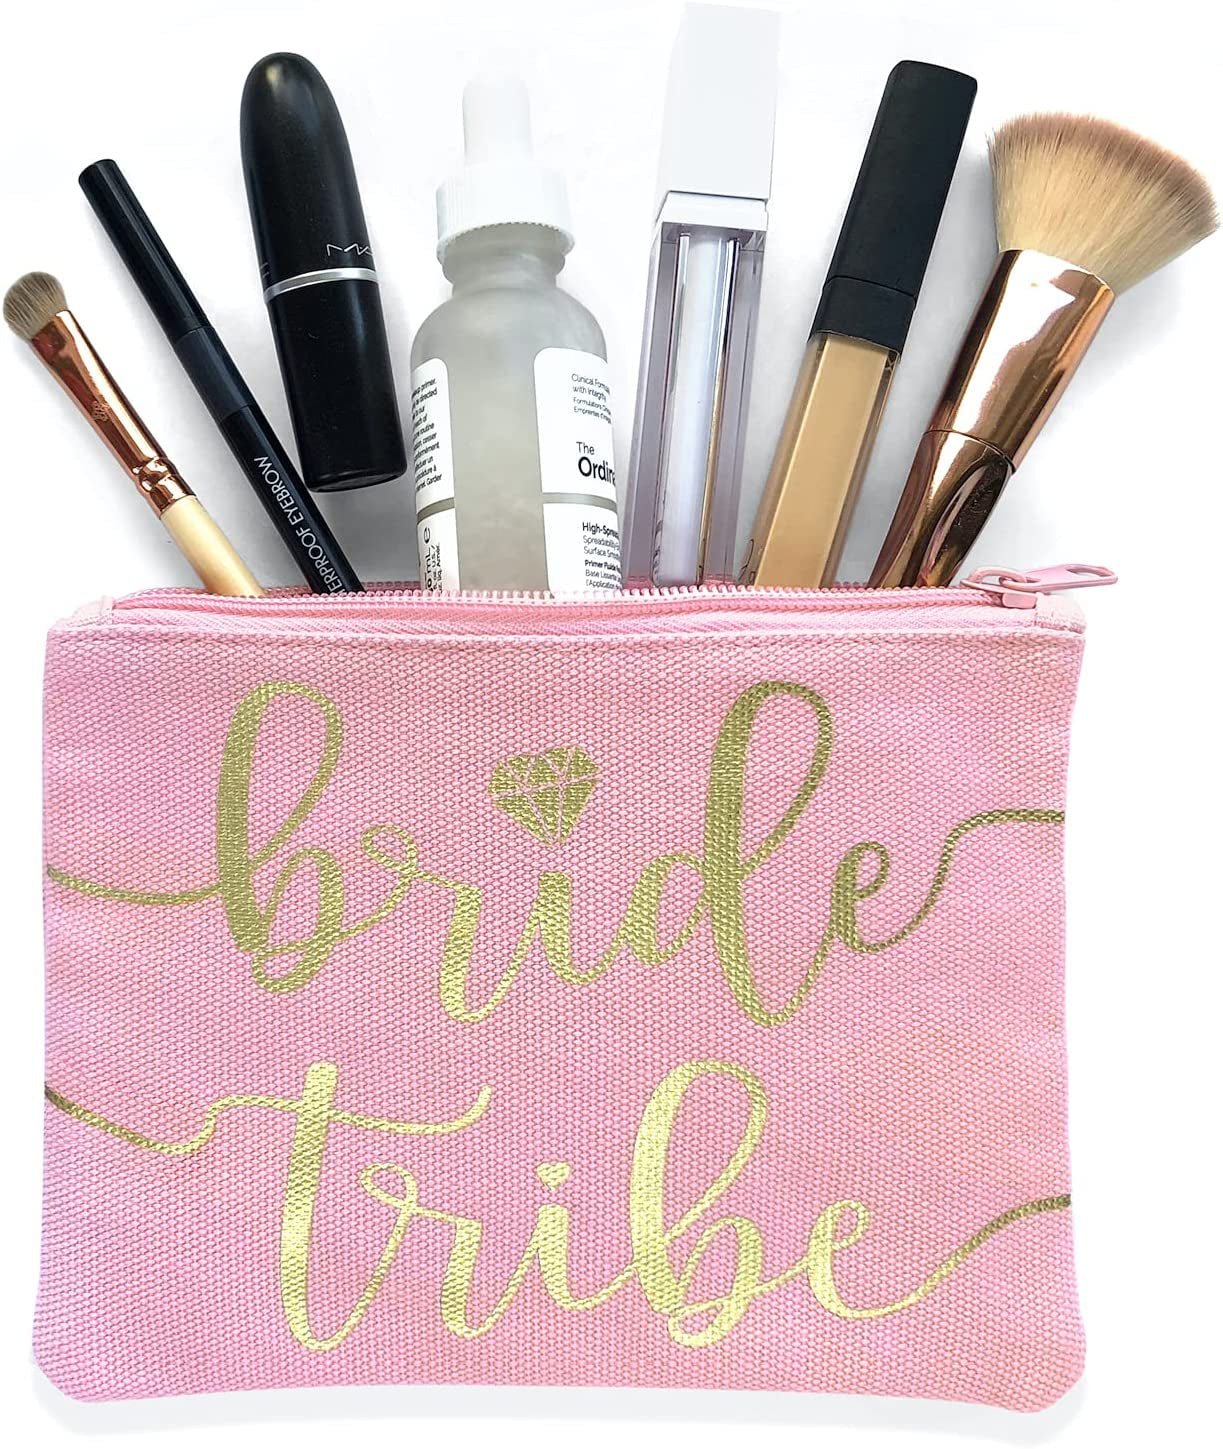 Bride Tribe Makeup Bags - Bridesmaid Favor for Bachelorette Party, Bridal Shower, Wedding. Cosmetics/Toiletries Bag, Wedding Survival Kit, Hangover Kit, Keepsake (4+1Pc Bride Tribe + Bride, Blush)